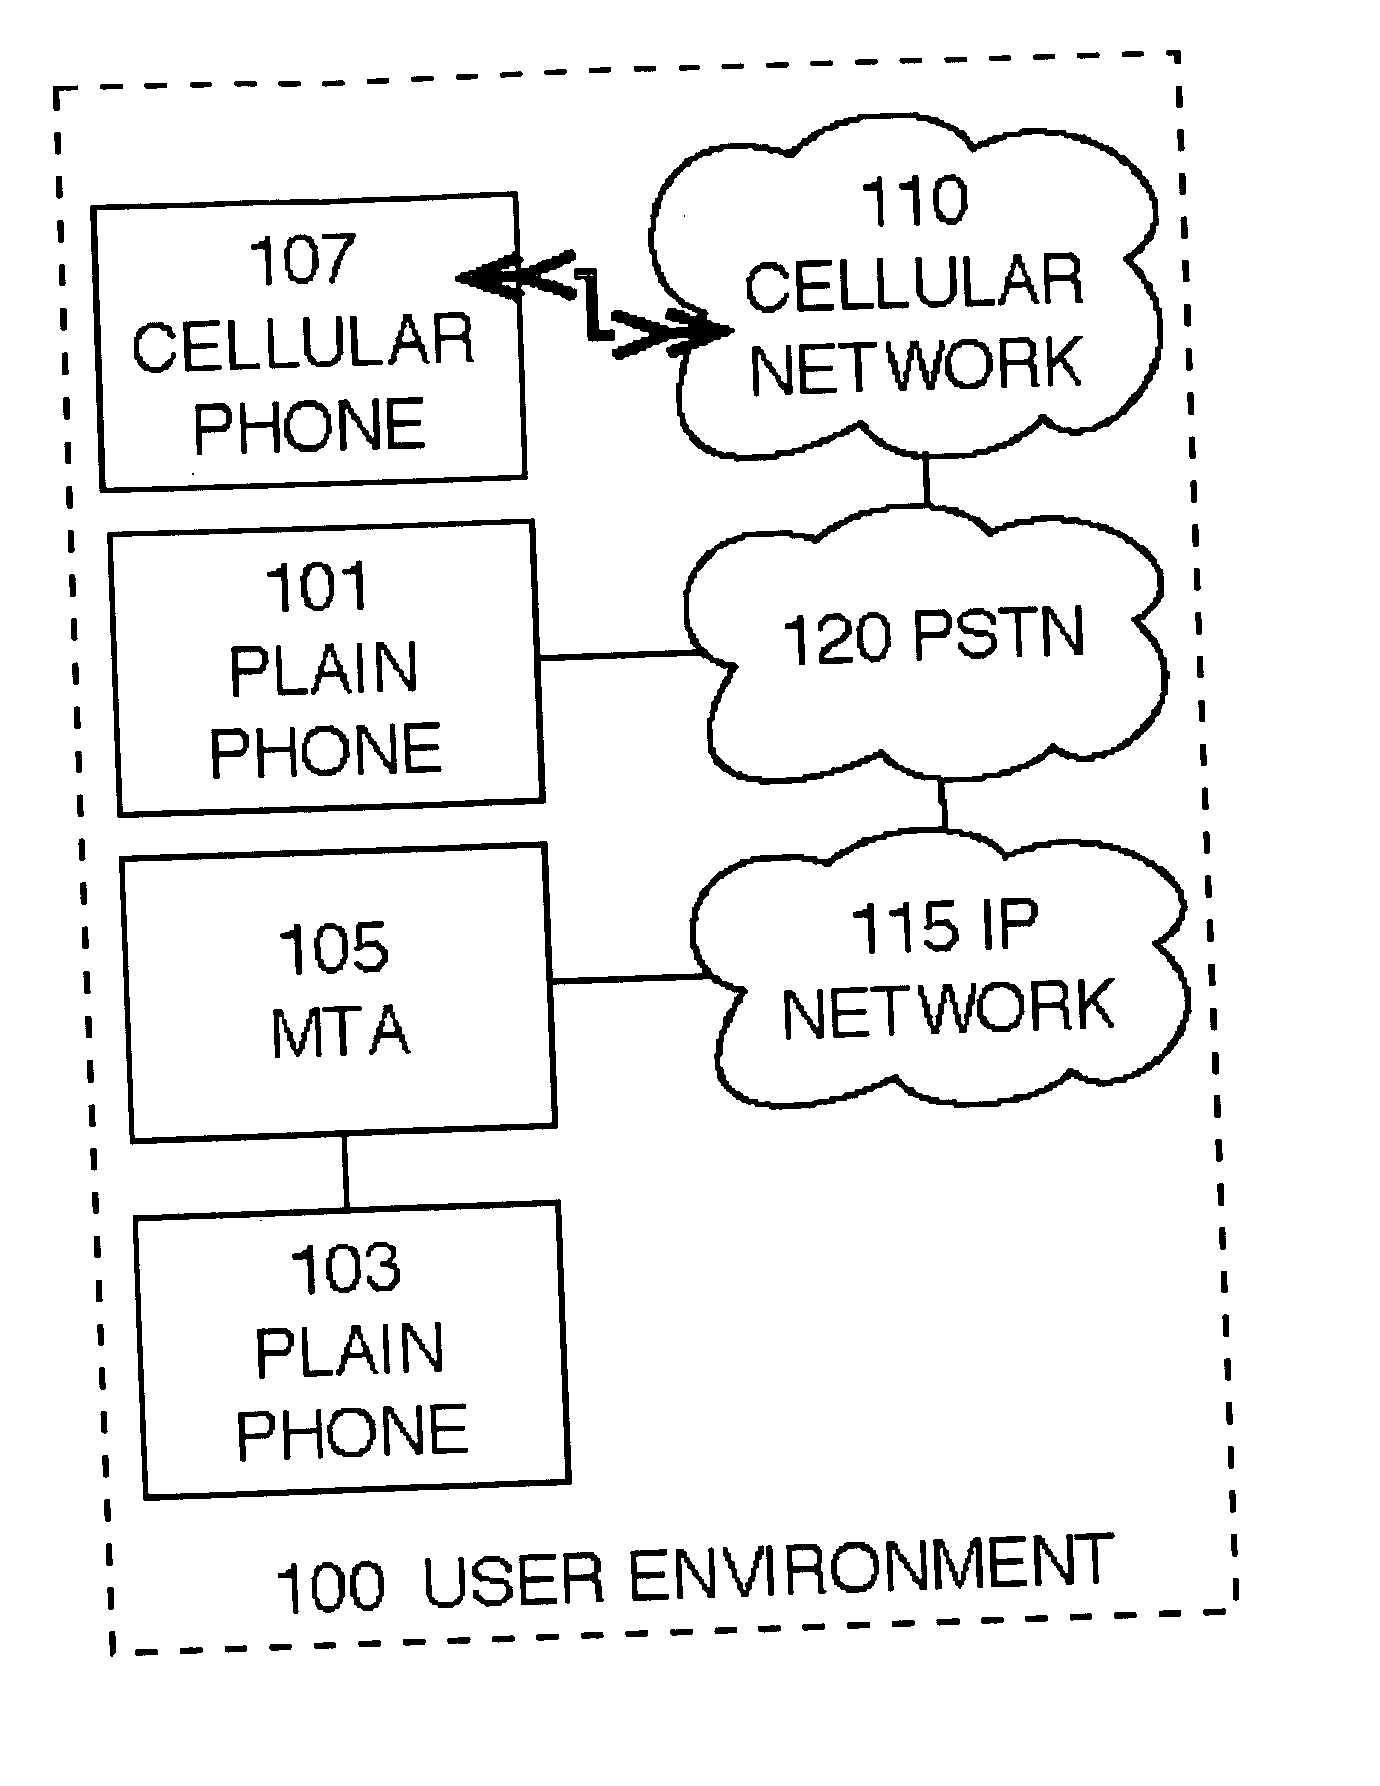 IP-enhanced cellular services